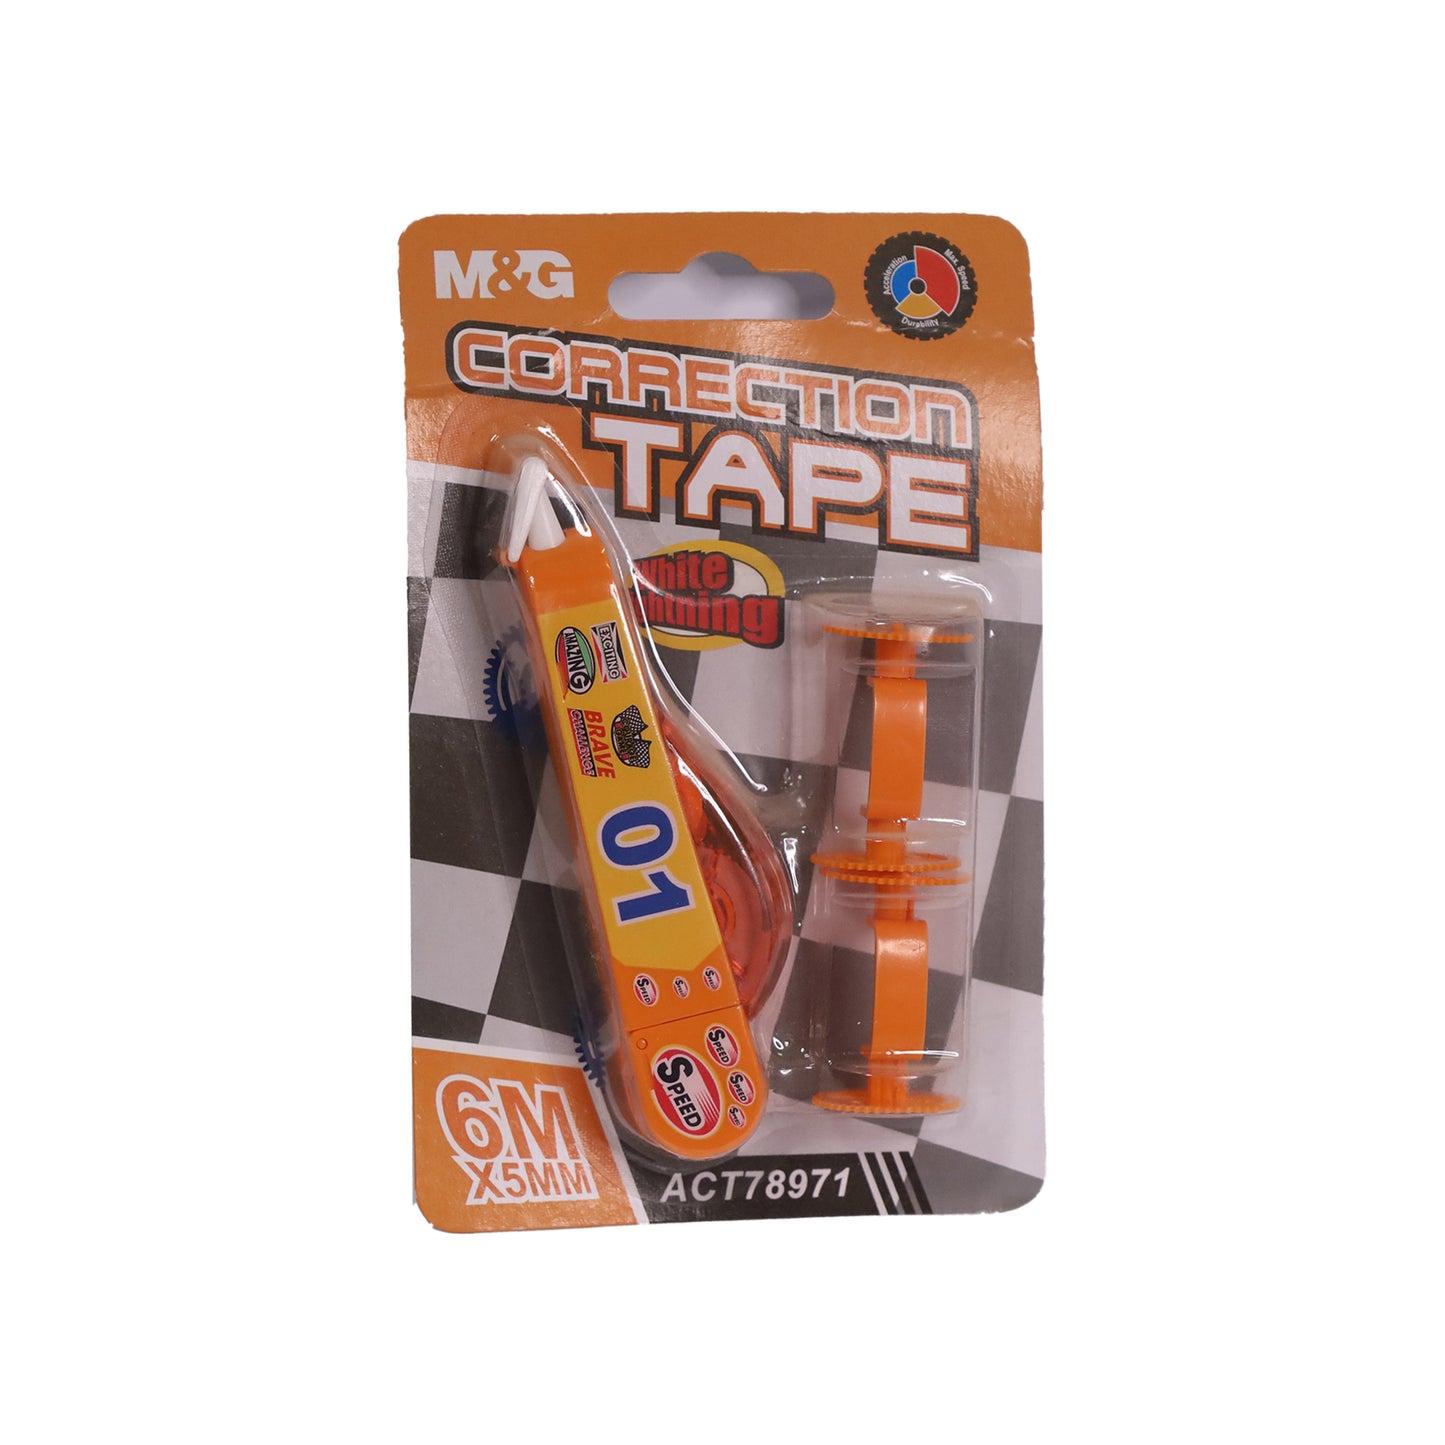 MG ACT78971 Tape Corrector 6m/200m